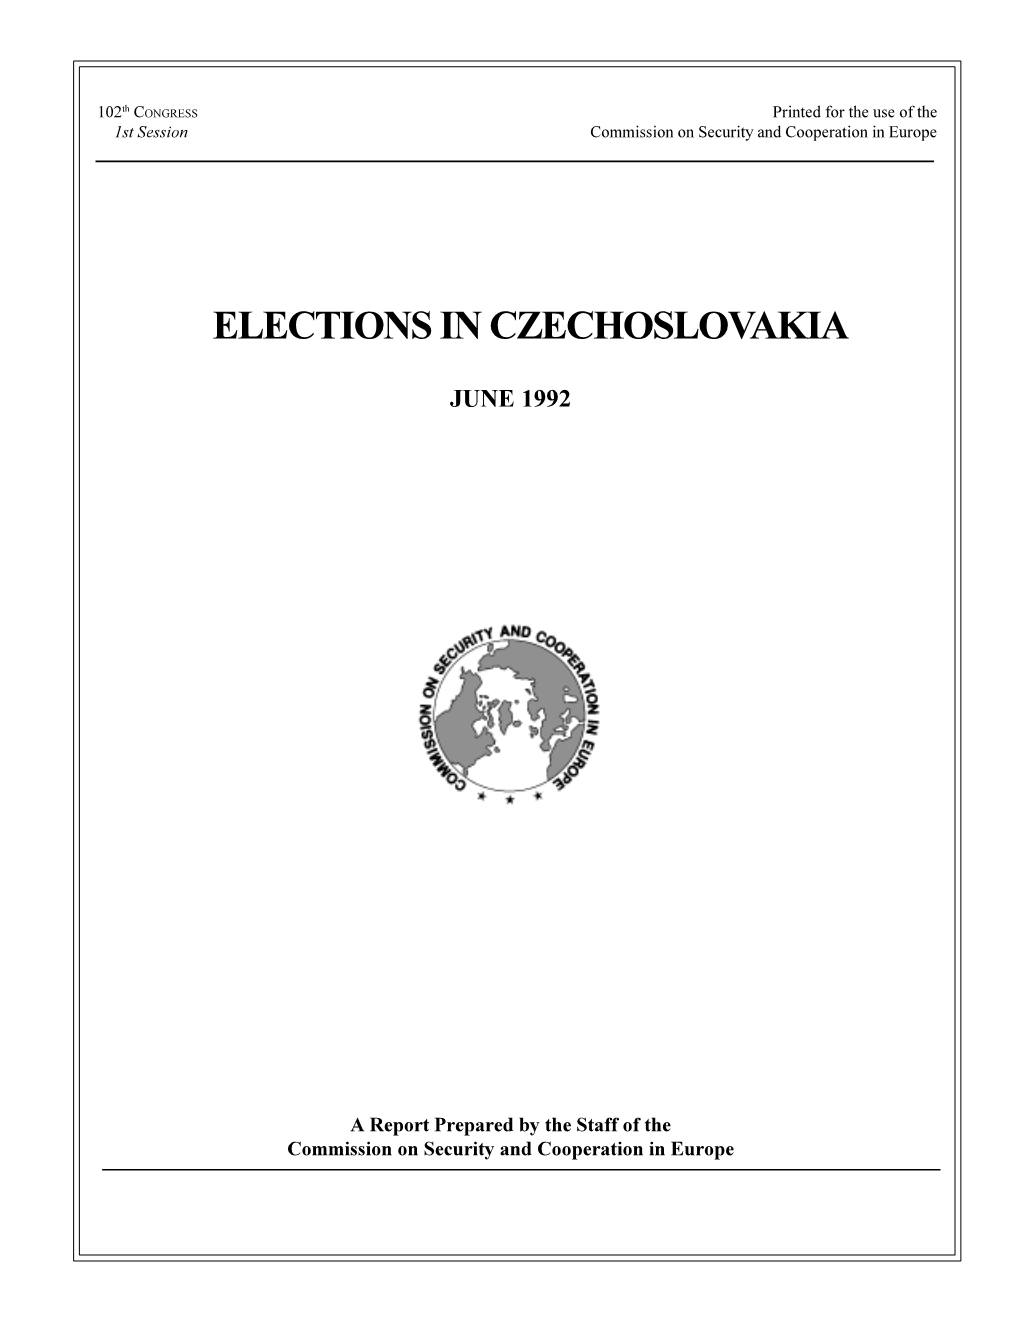 Elections in Czechoslovakia